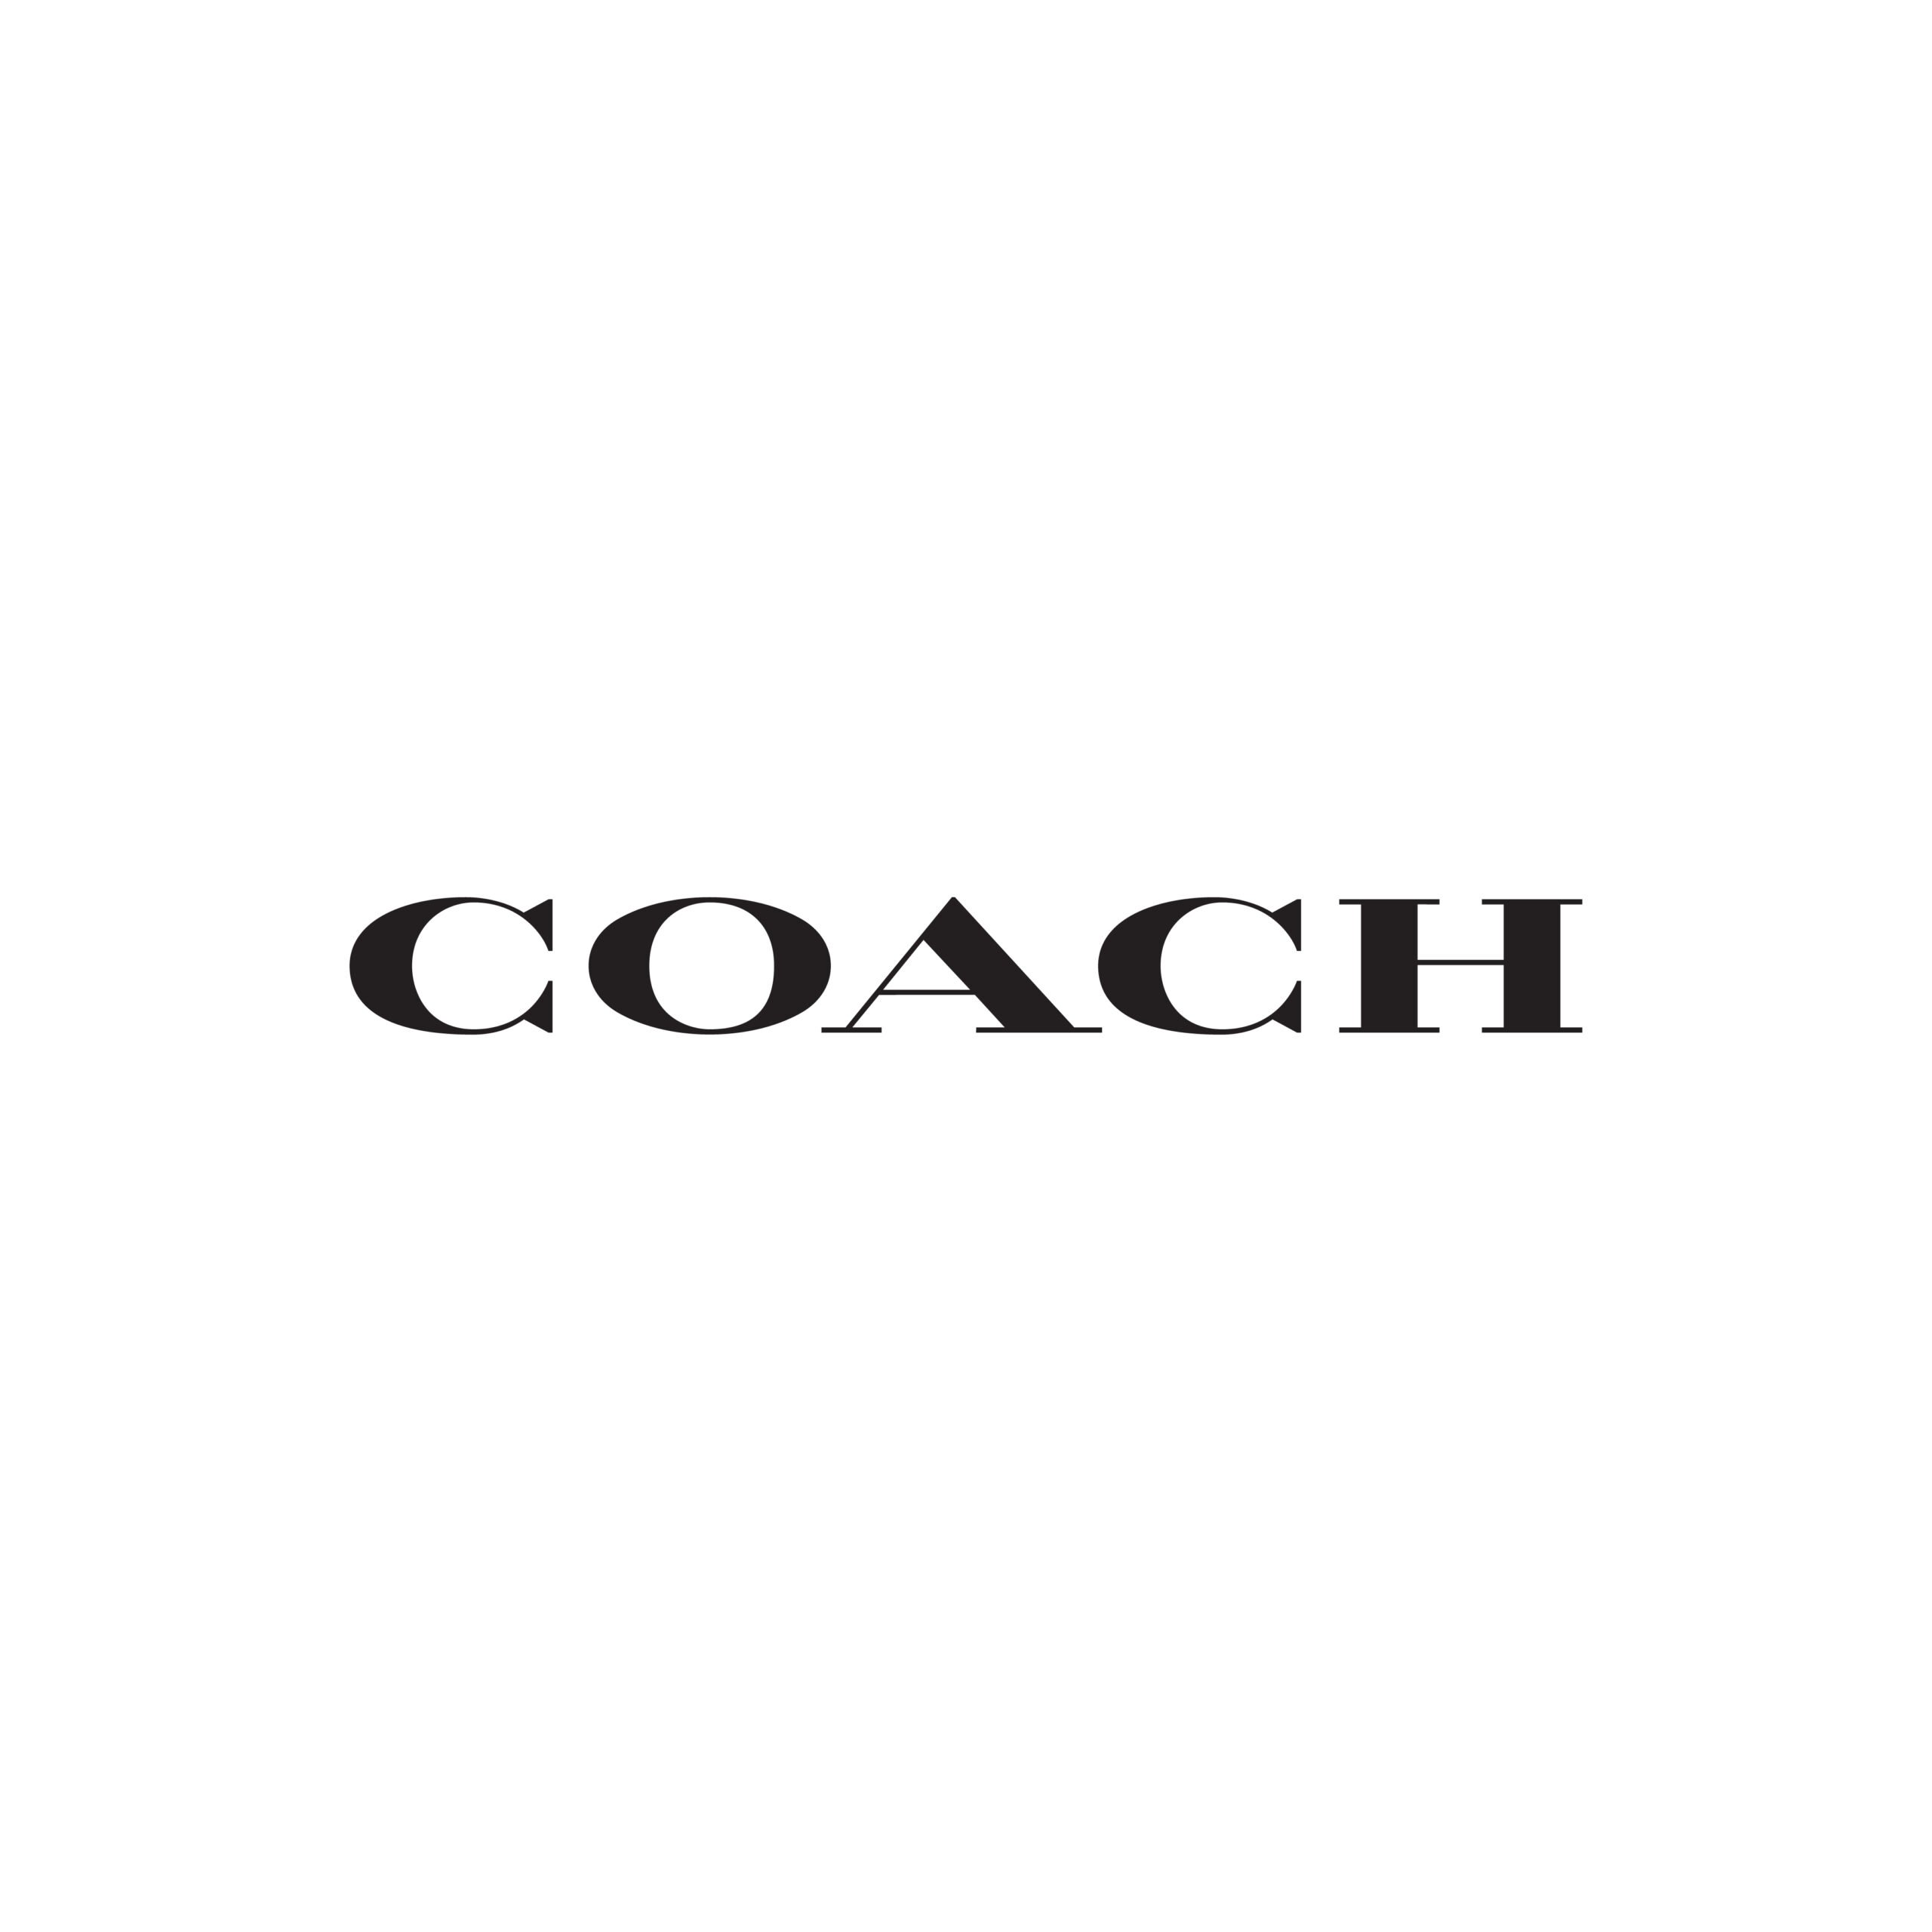 Coach Brand Logo